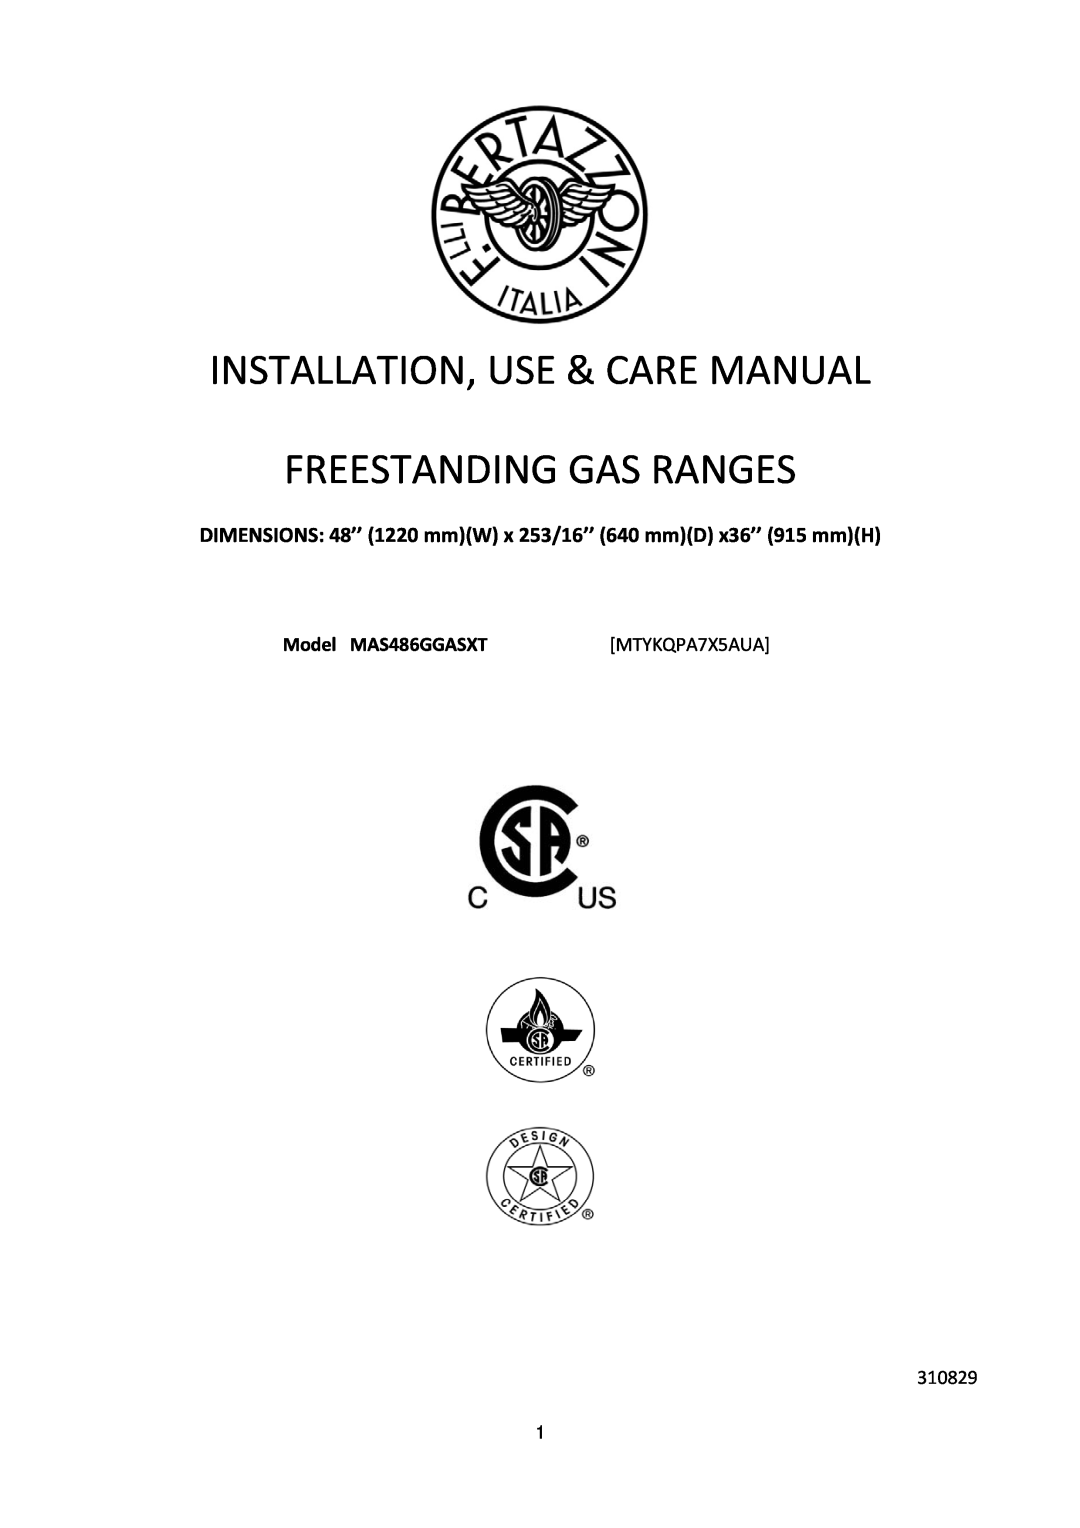 Bertazzoni dimensions Installation, Use & Care Manual Freestanding Gas Ranges, Model MAS486GGASXT, MTYKQPA7X5AUA 